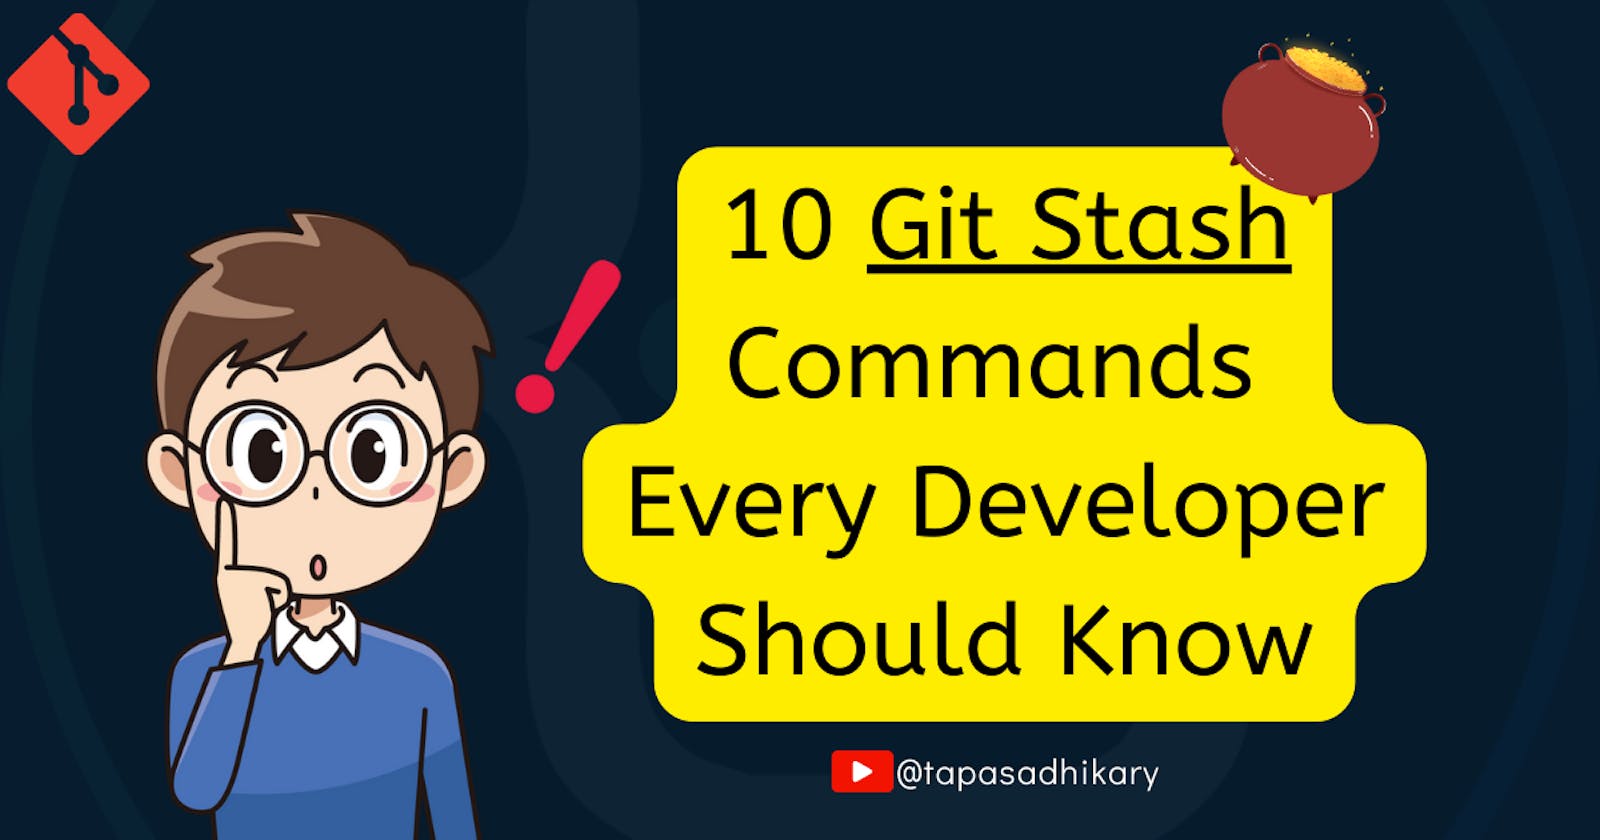 10 Git stash commands every developer should know